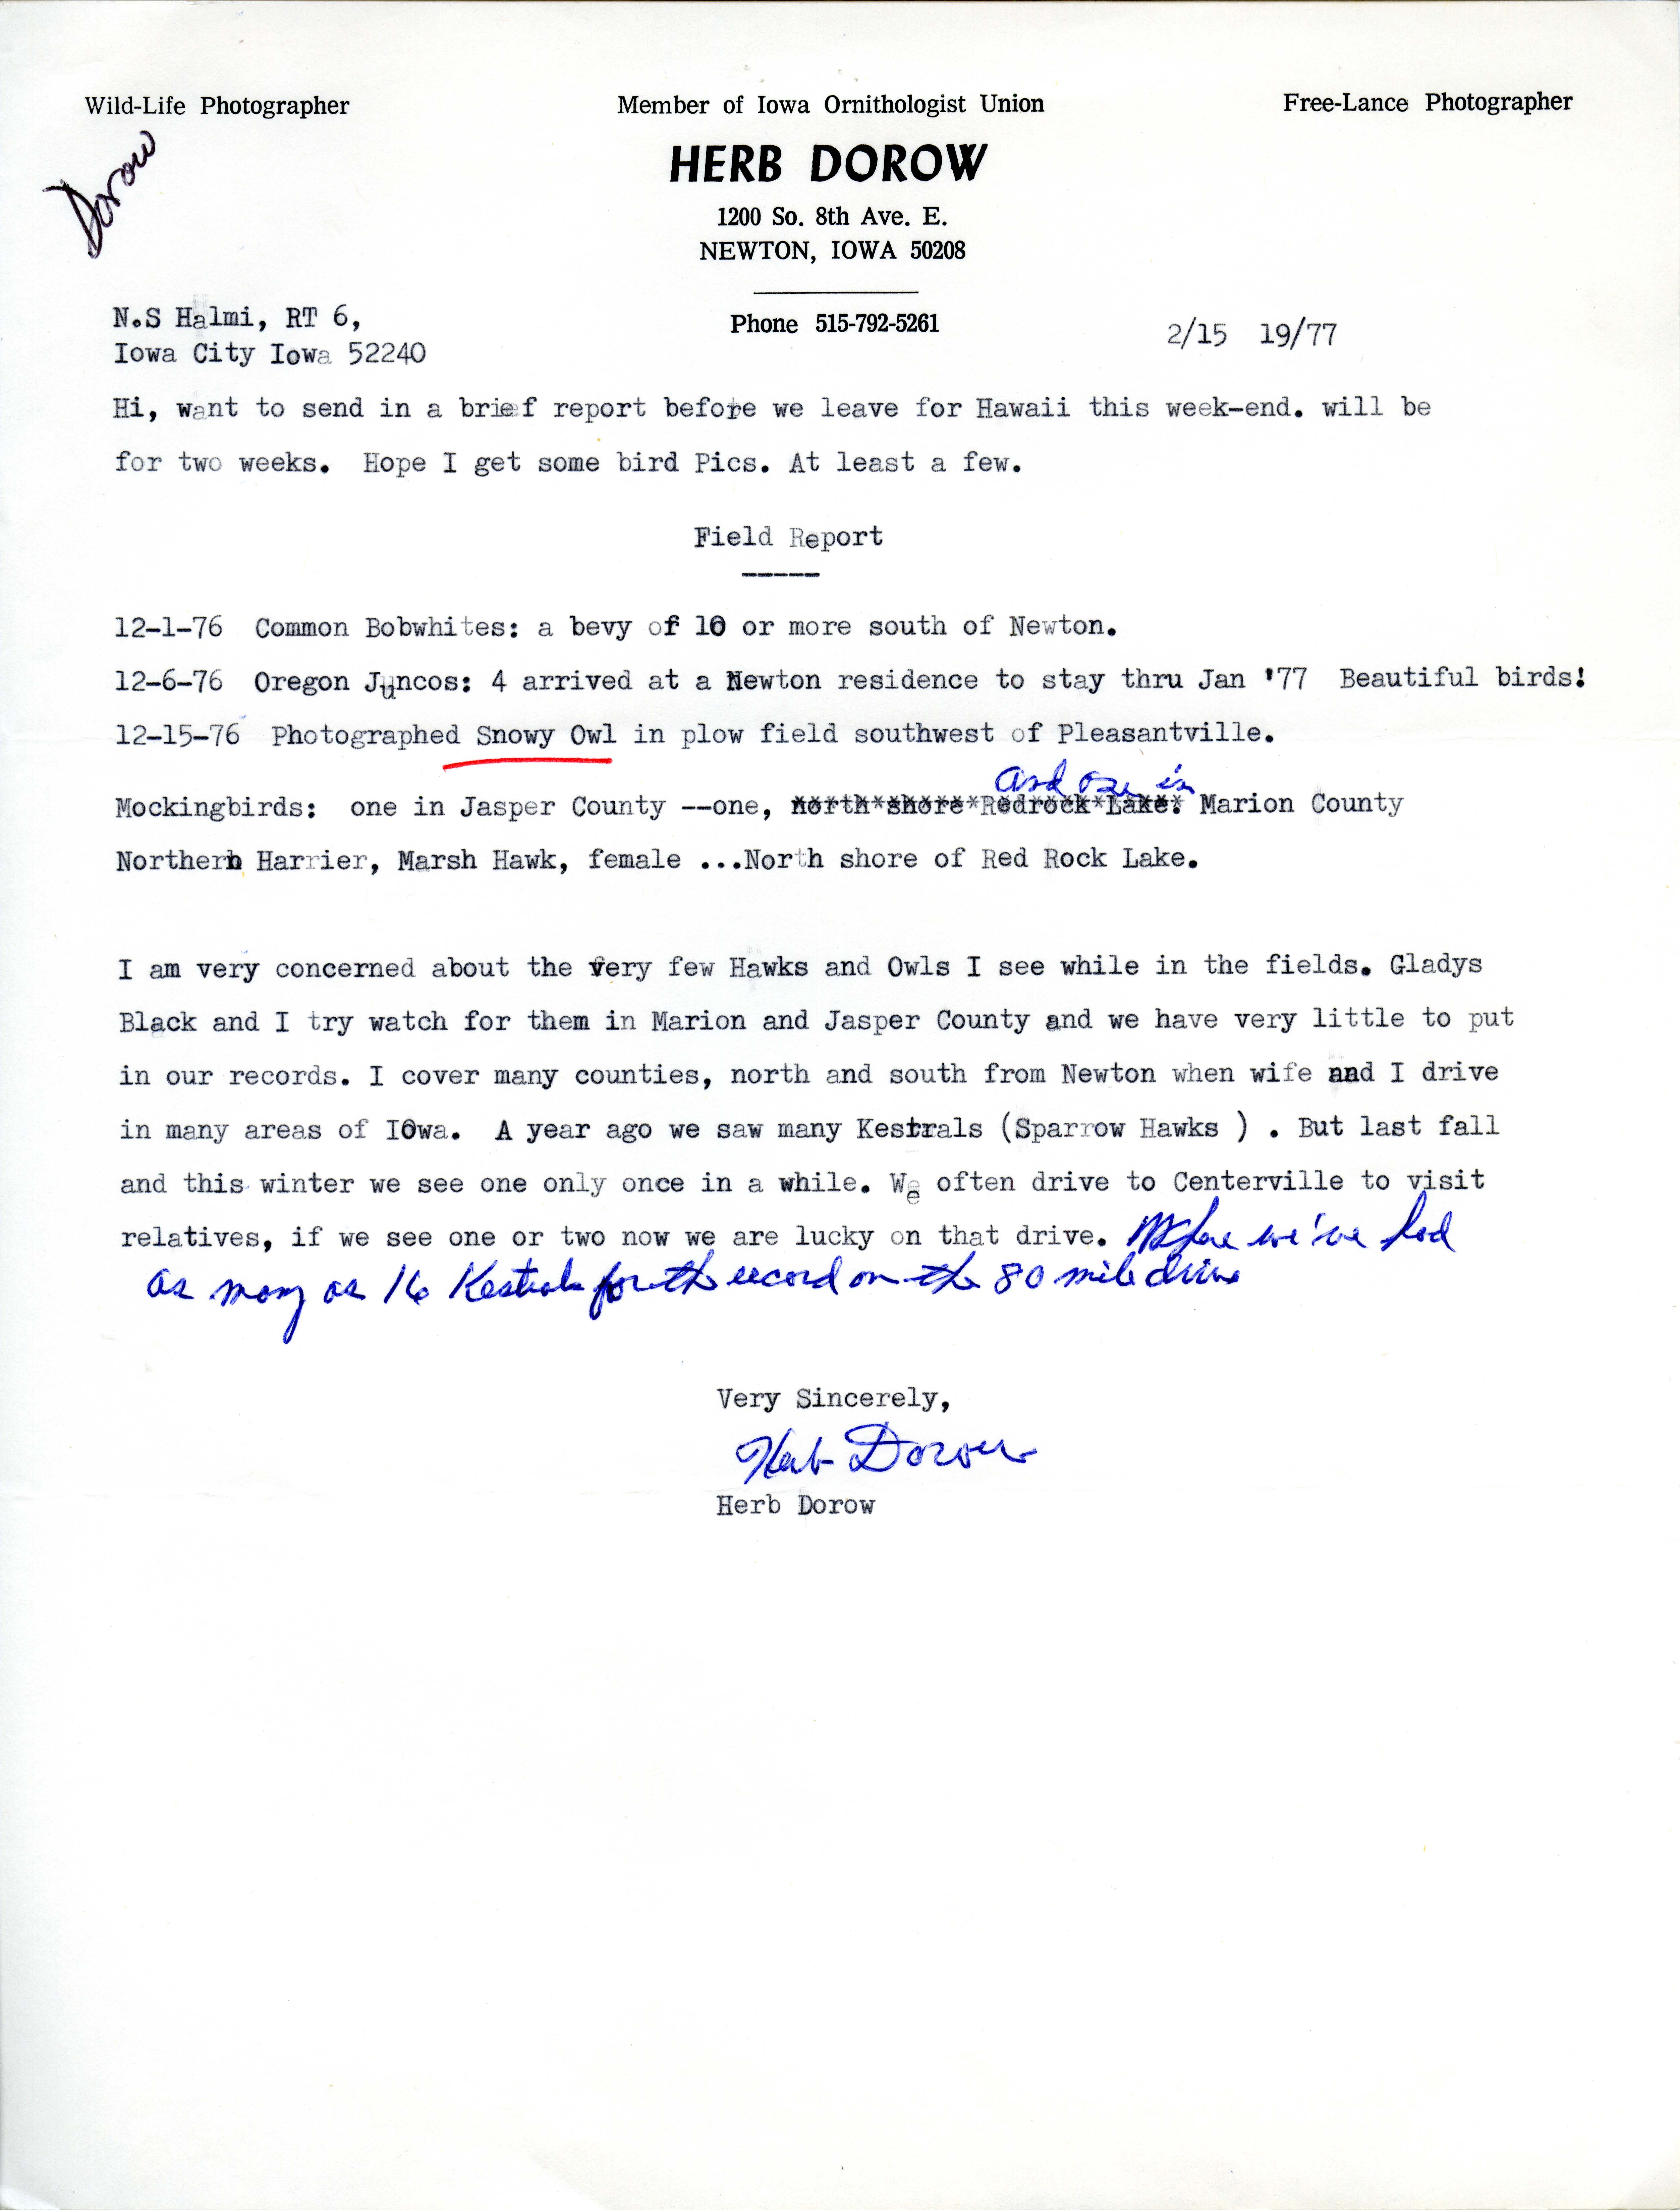 Herb Dorow letter to Nicholas S. Halmi regarding bird sightings, February 15, 1977